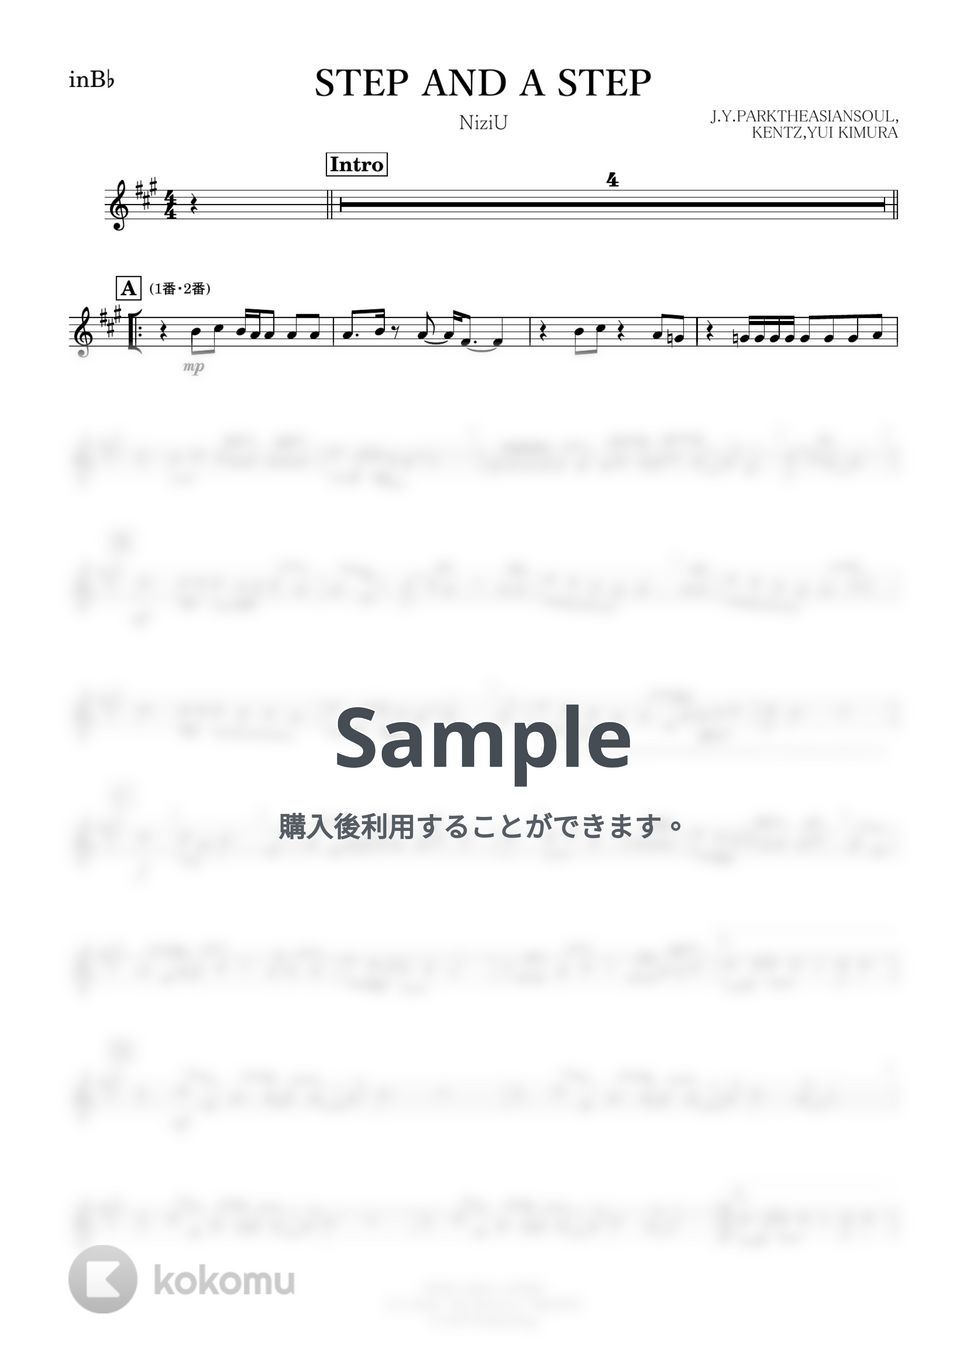 NiziU - Step and a step (B♭) by kanamusic